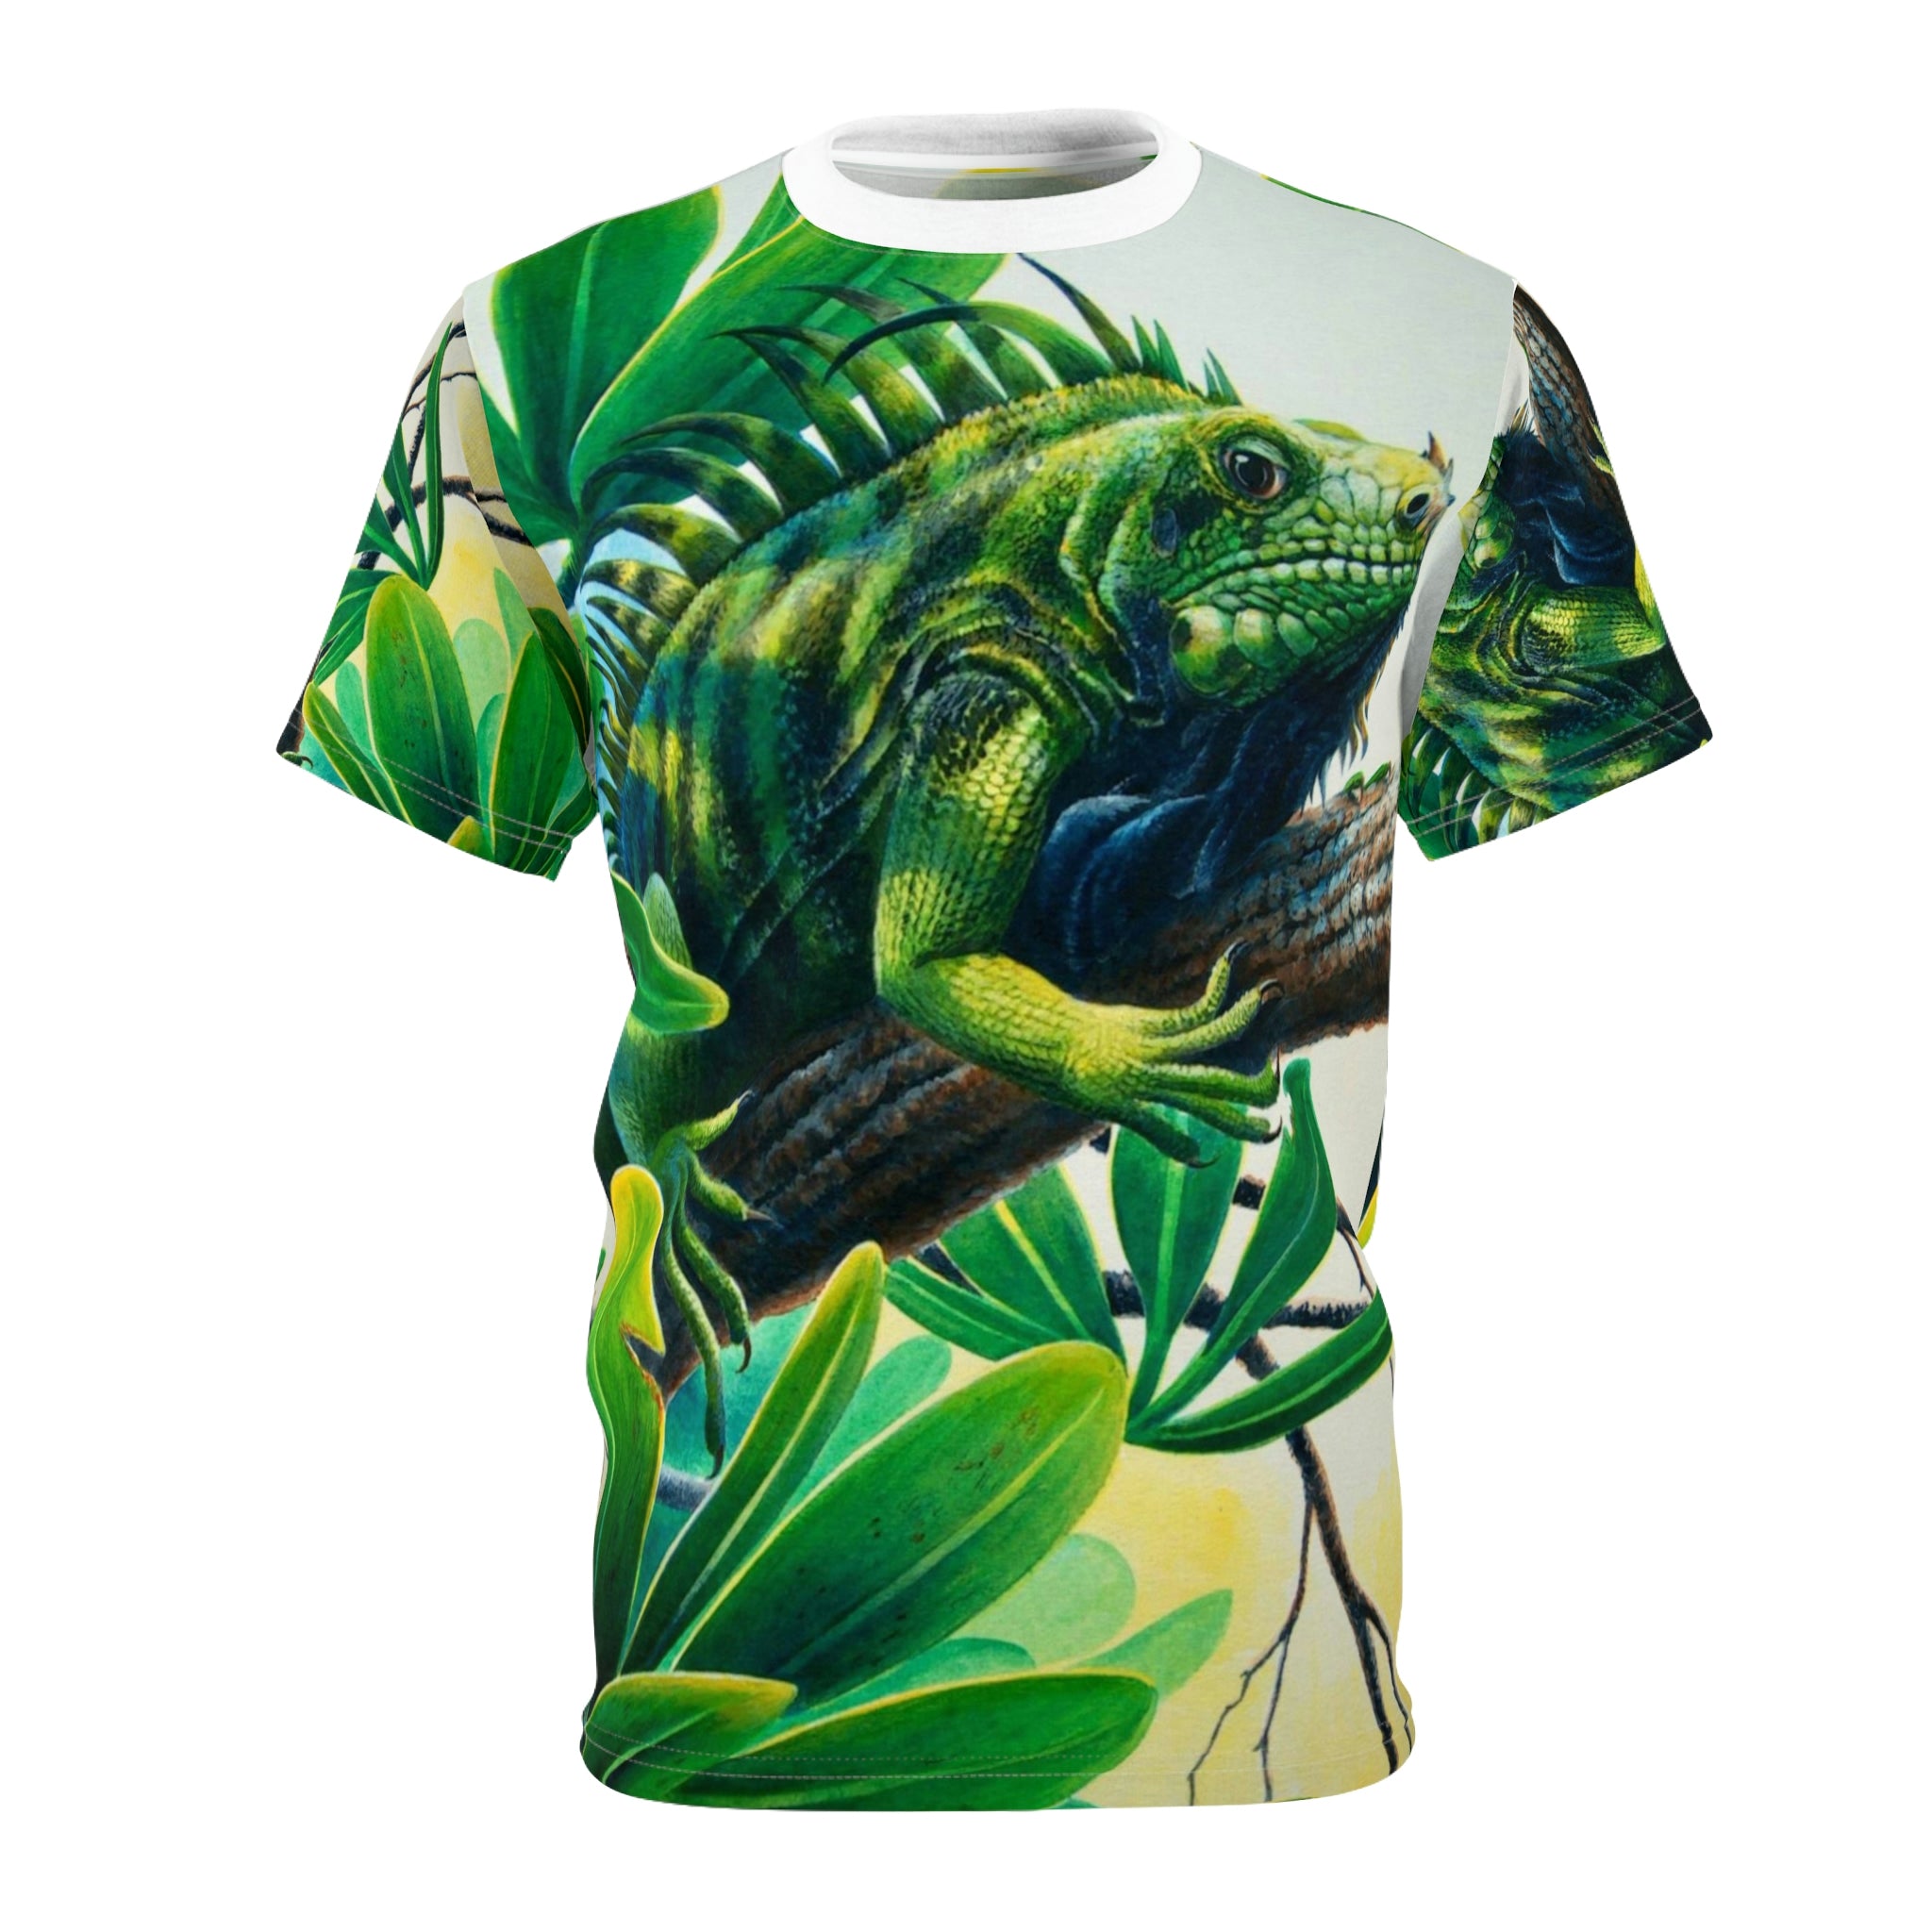 Iguana All Over Print Unisex Shirt